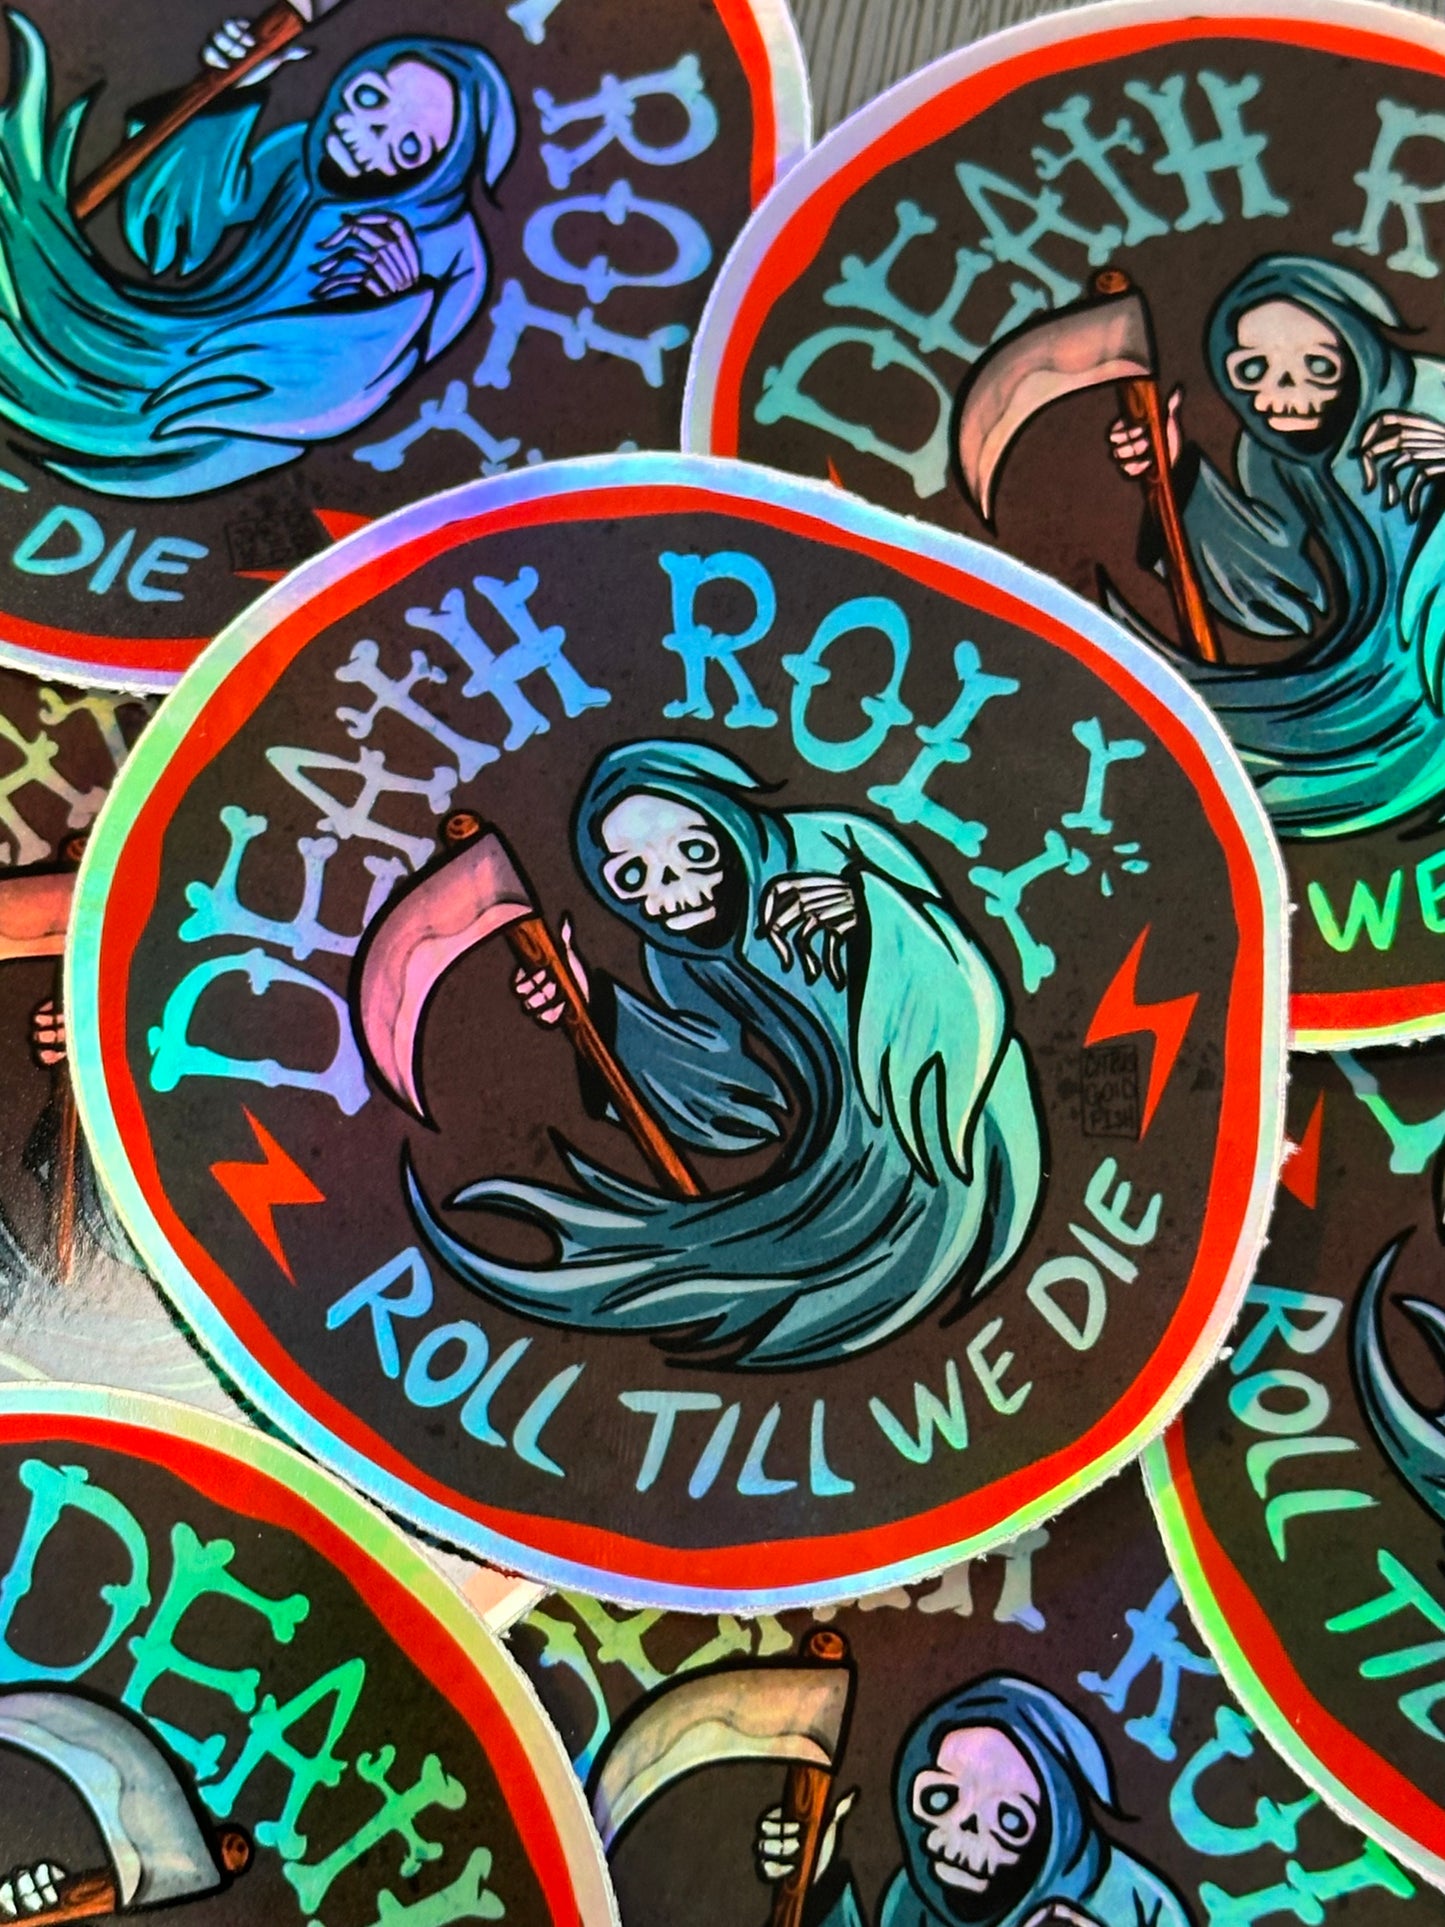 Death Roll “Roll till we die” vinyl chrome stickers